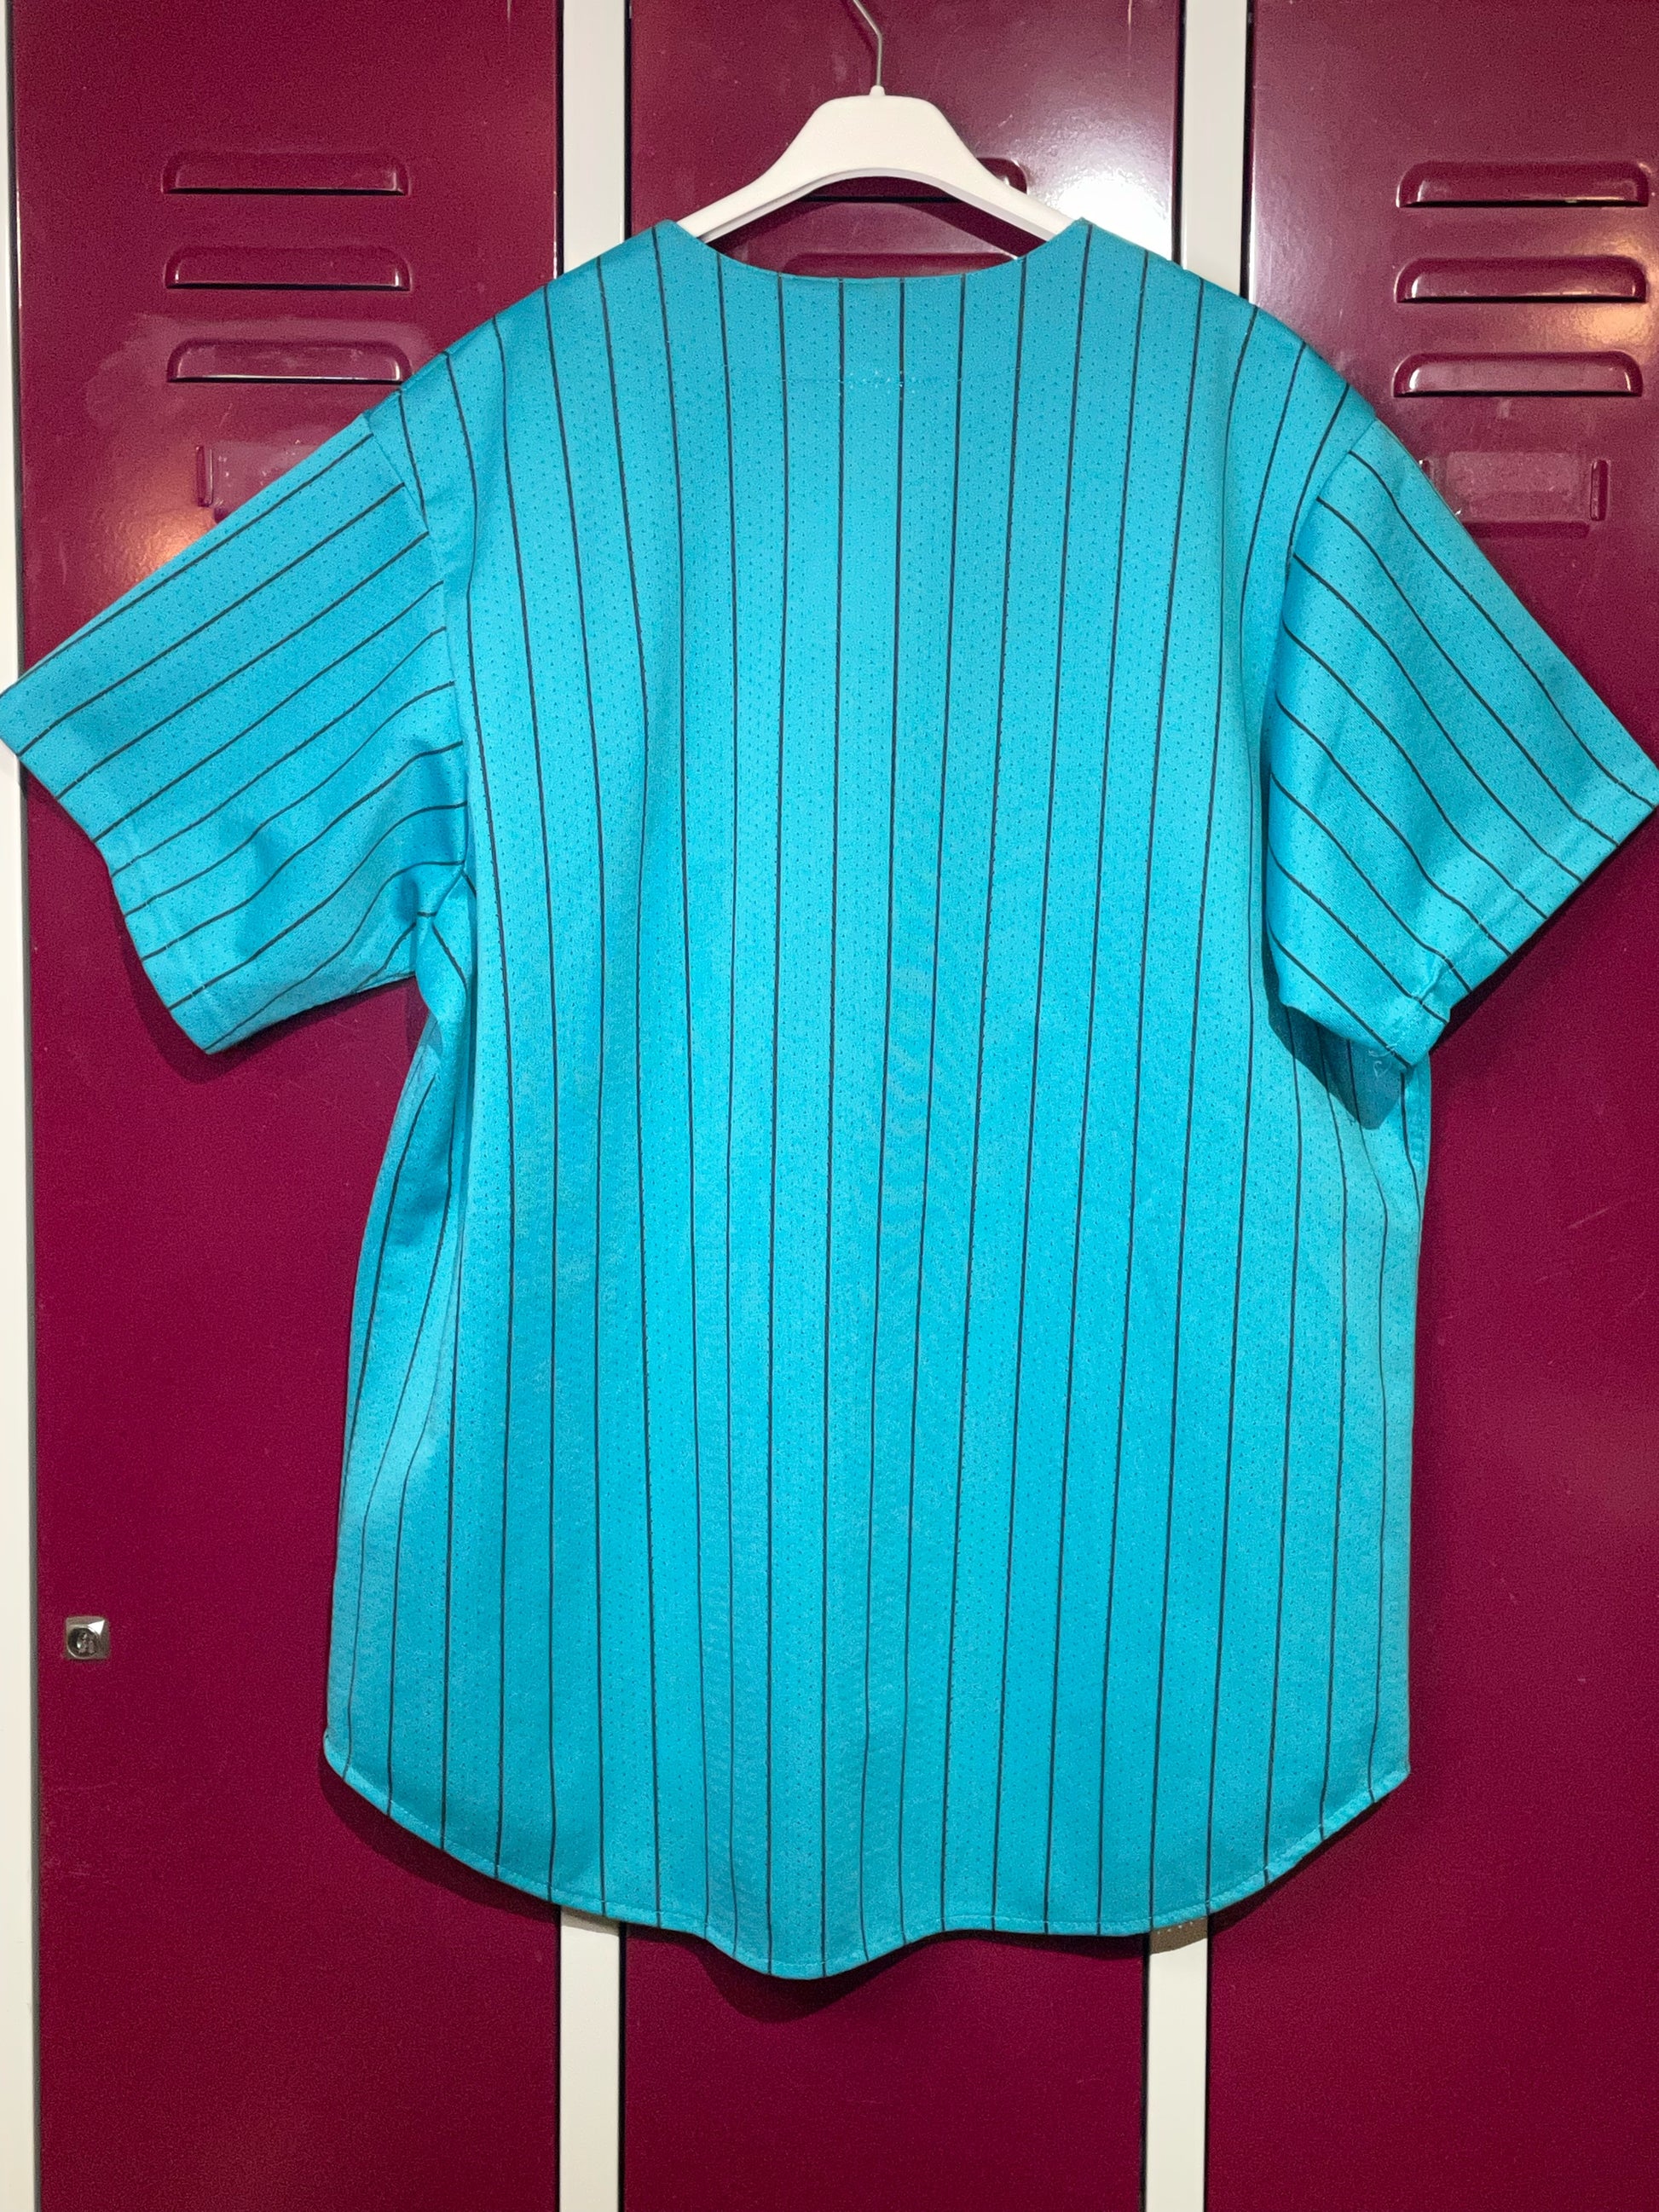 Preowned Majestic MLB Miami Marlins Baseball Shirt Jersey Size XL R1